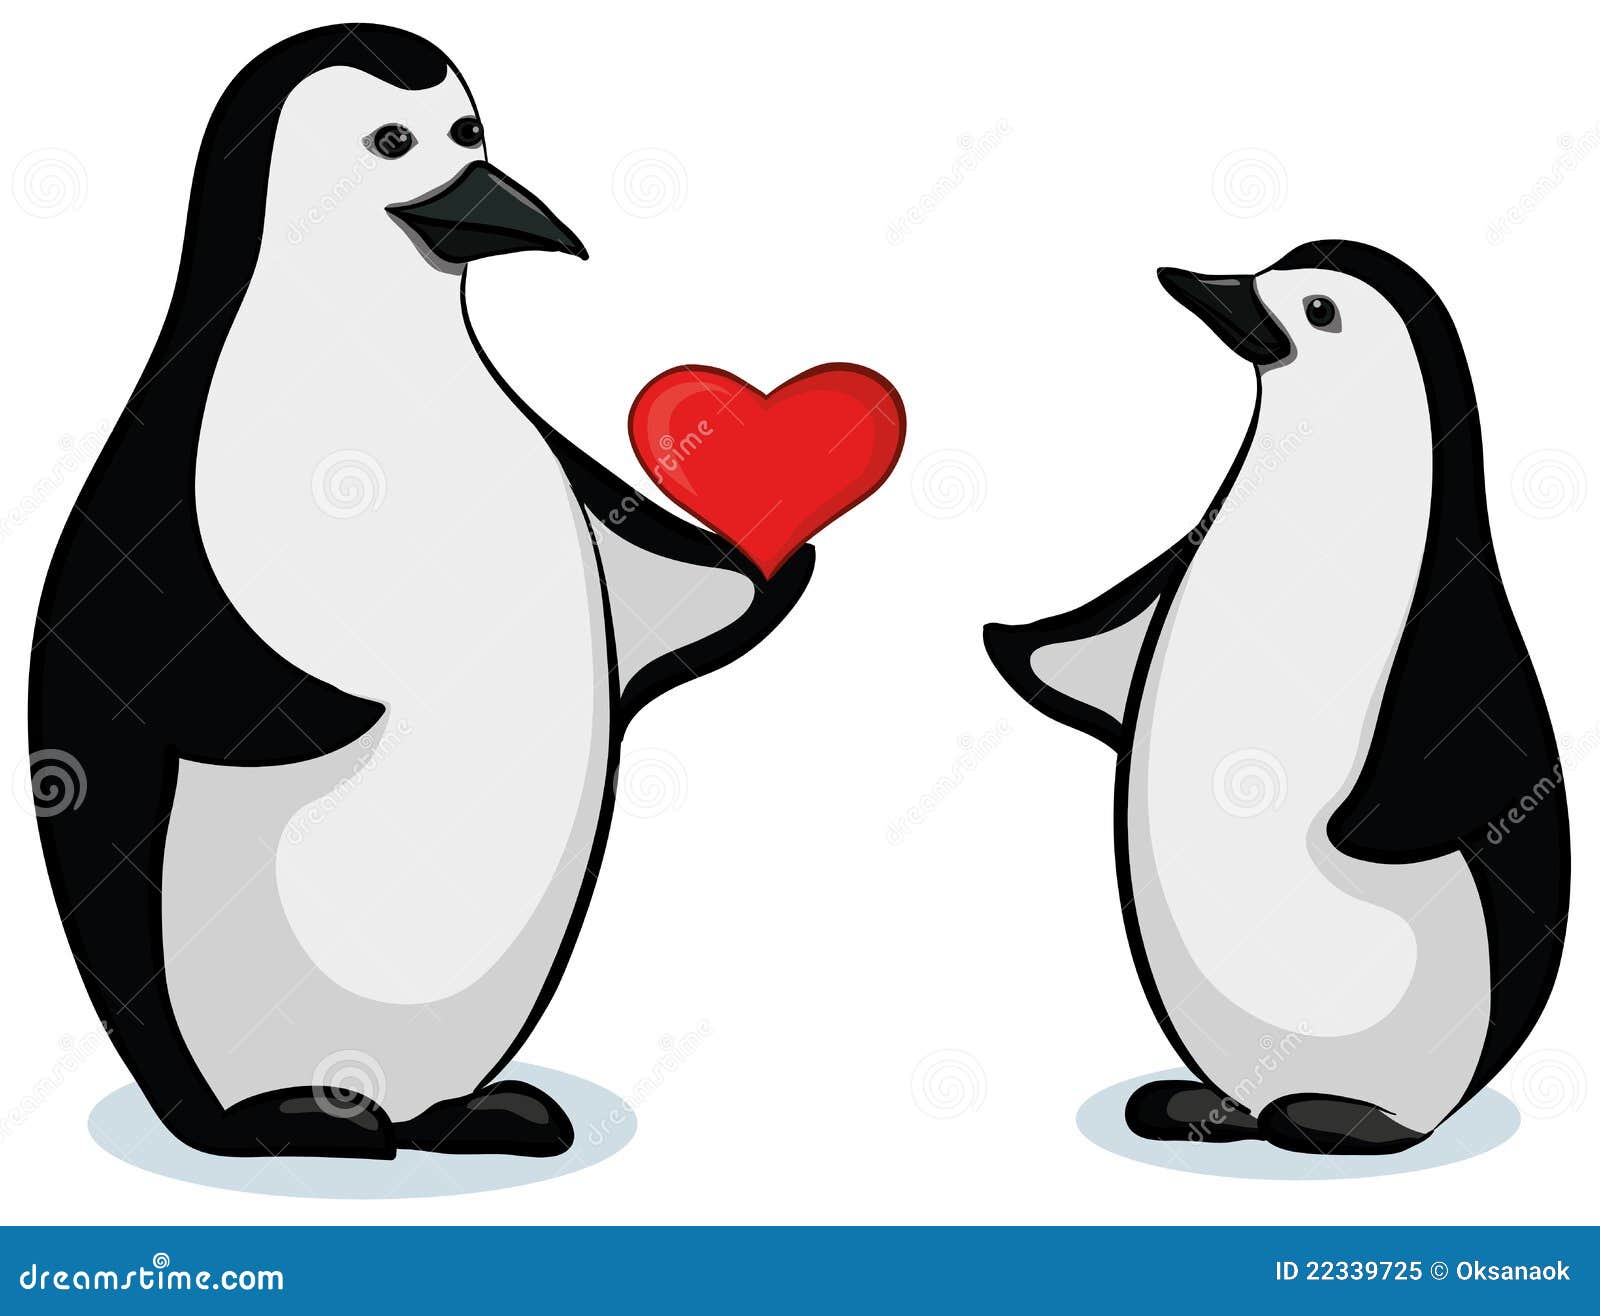 penguin valentine clipart - photo #39